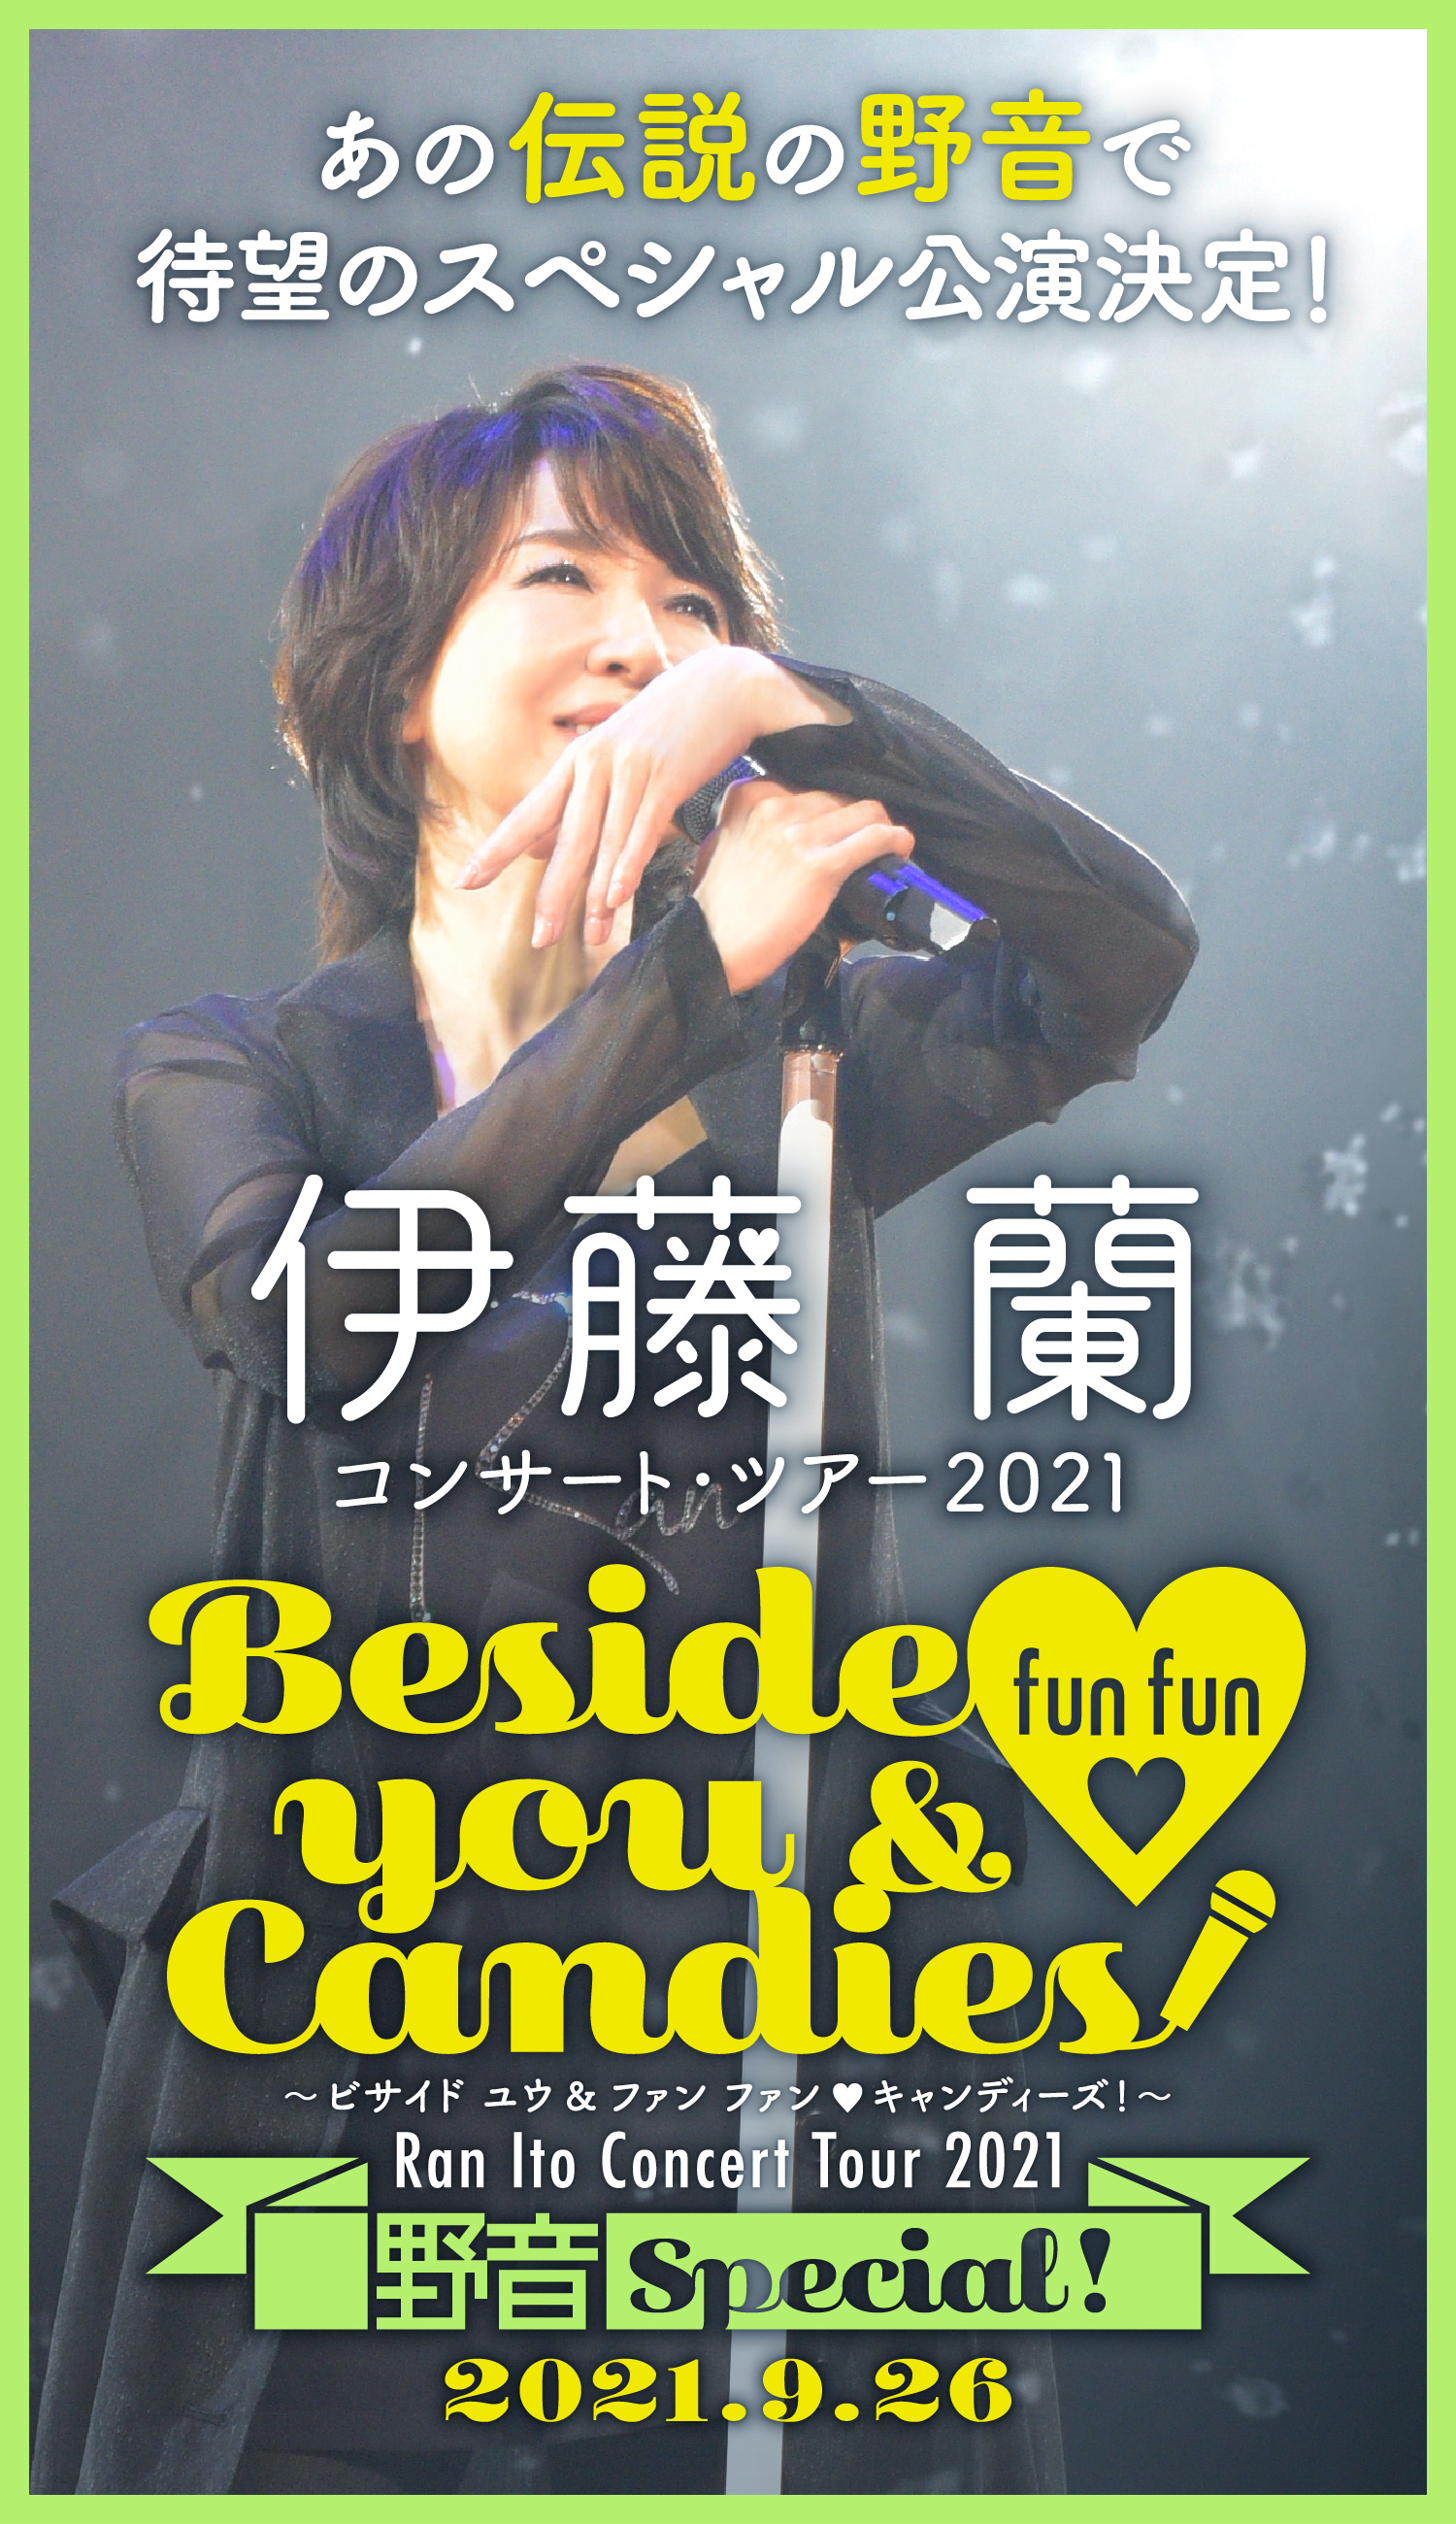 市場 伊藤蘭 you 〜Beside fun ツアー2021 〜野音Special Candies 